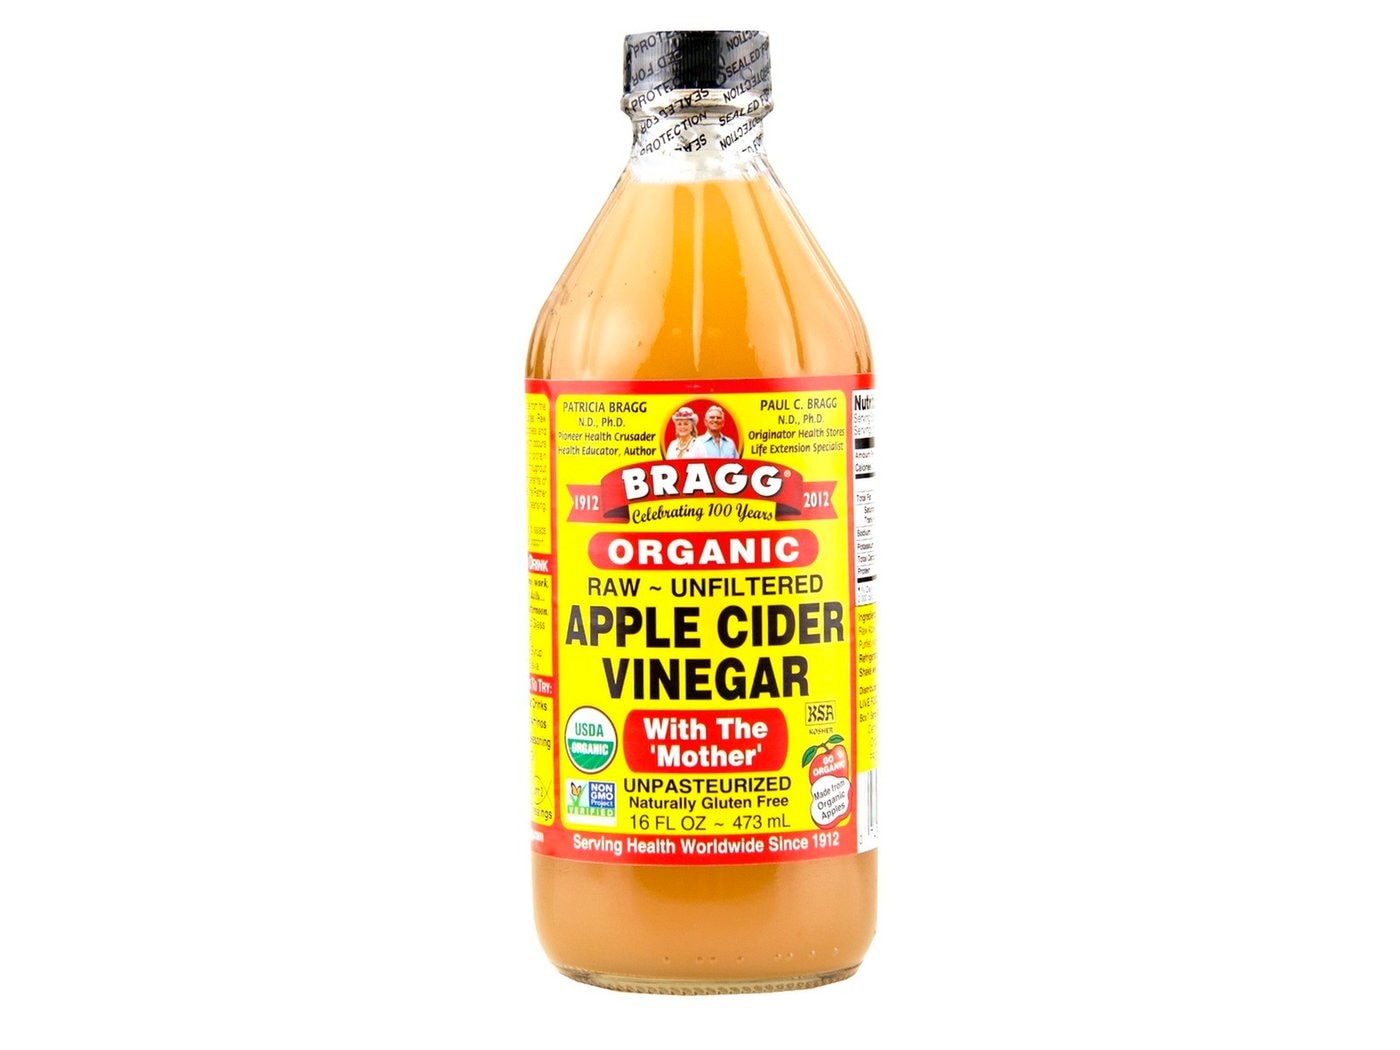 Bragg Organic Apple Cider Vinegar image zoom